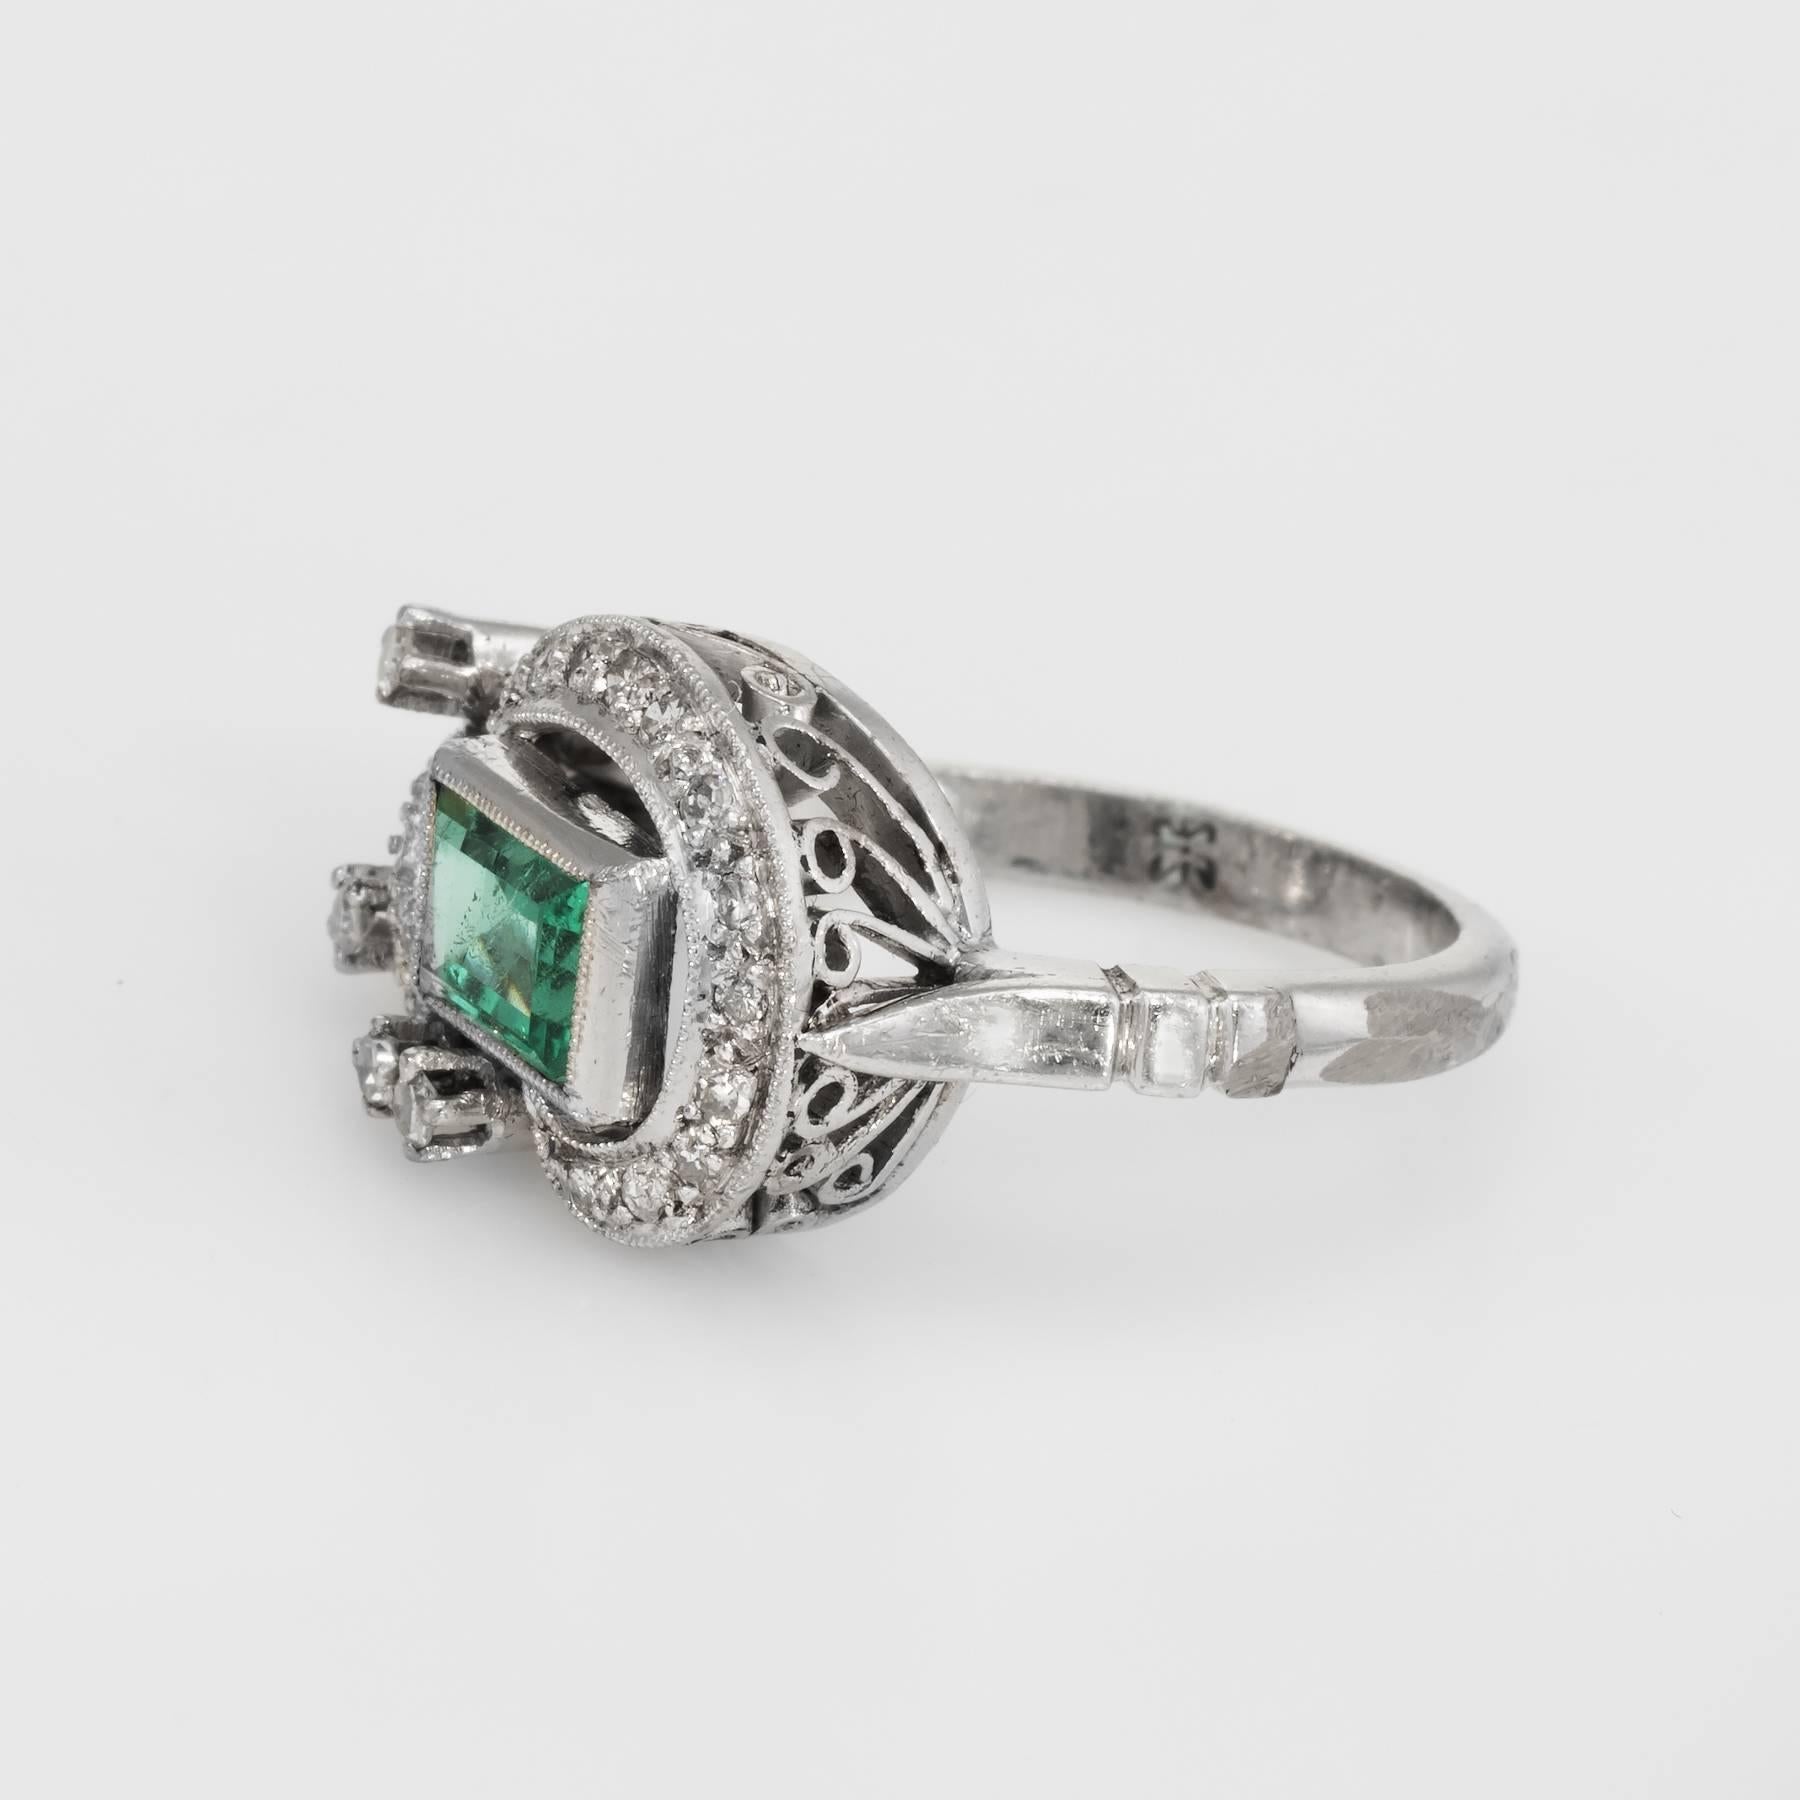 Emerald Cut Emerald Diamond Palladium Ring Vintage Cocktail Jewelry